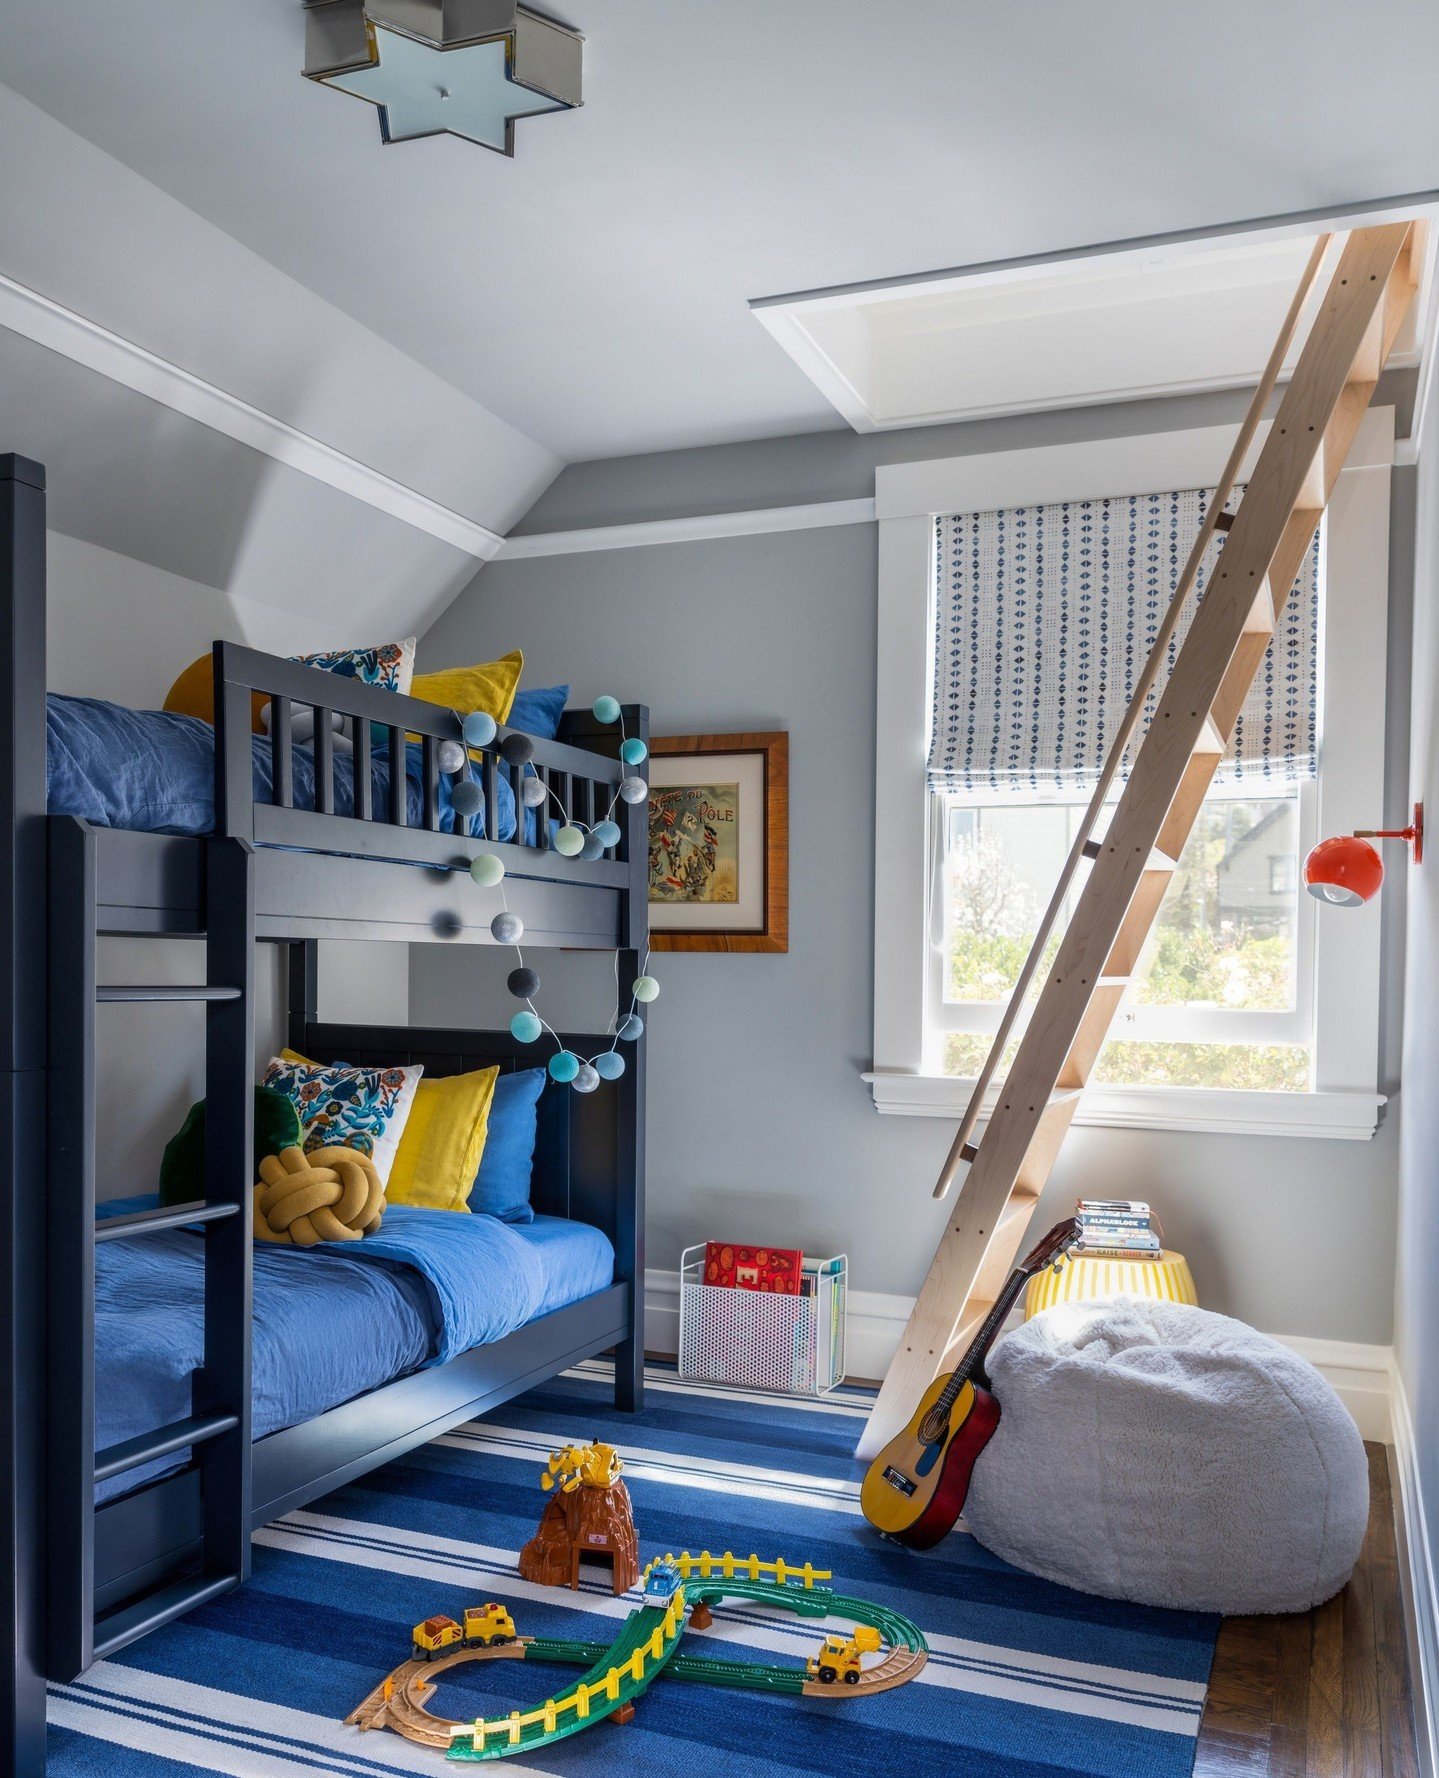 ⁠Ladder to cozy attic art/reading/play hangout anyone? ⁠
⁠
📸: @kuohphotographyinteriors / project featured in @hgtvmagazine⁠
⁠
#studiomunroe #roomoftheday #roomwithaview #interiordesign #sanfrancisco #bedroomdesign